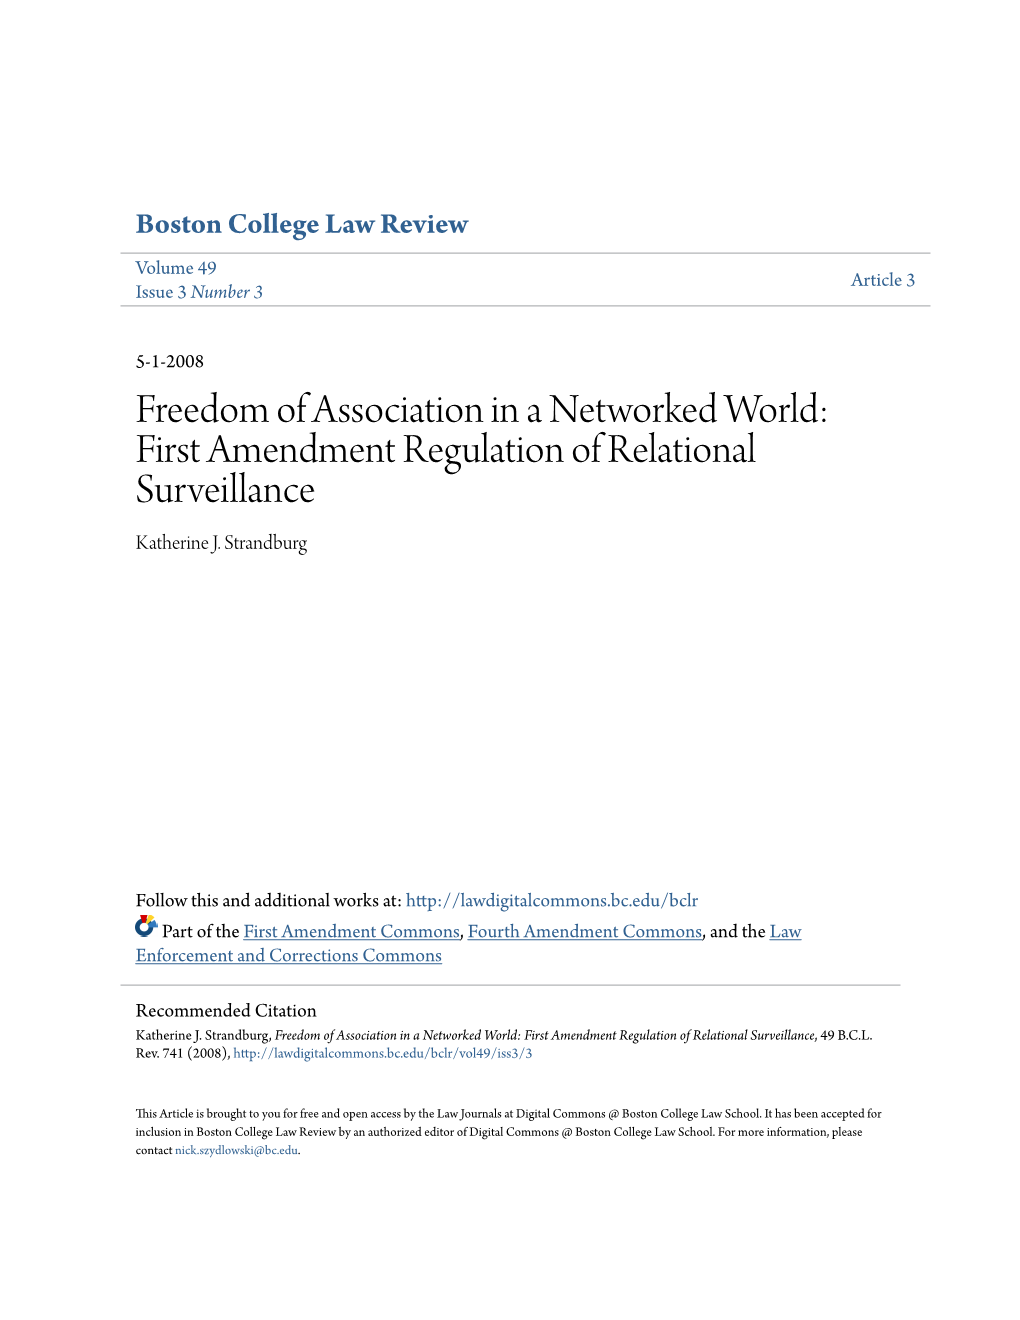 First Amendment Regulation of Relational Surveillance Katherine J